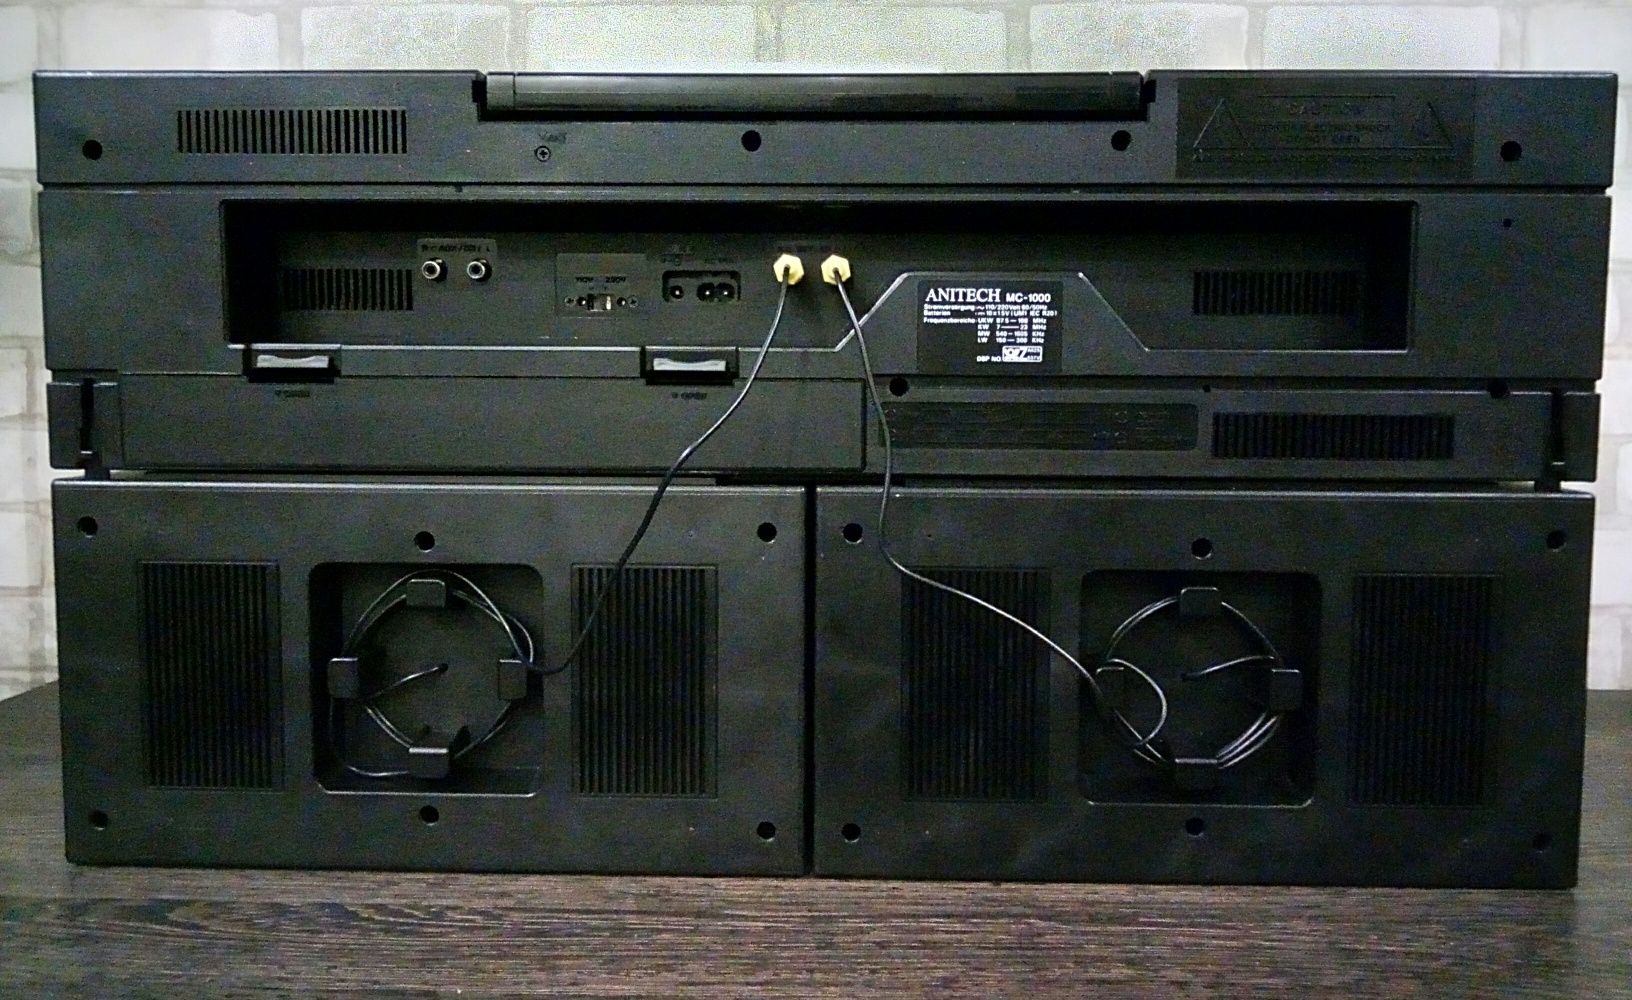 Anitech MC-1000 Stereo Radio Double Cassette Recorder 1987